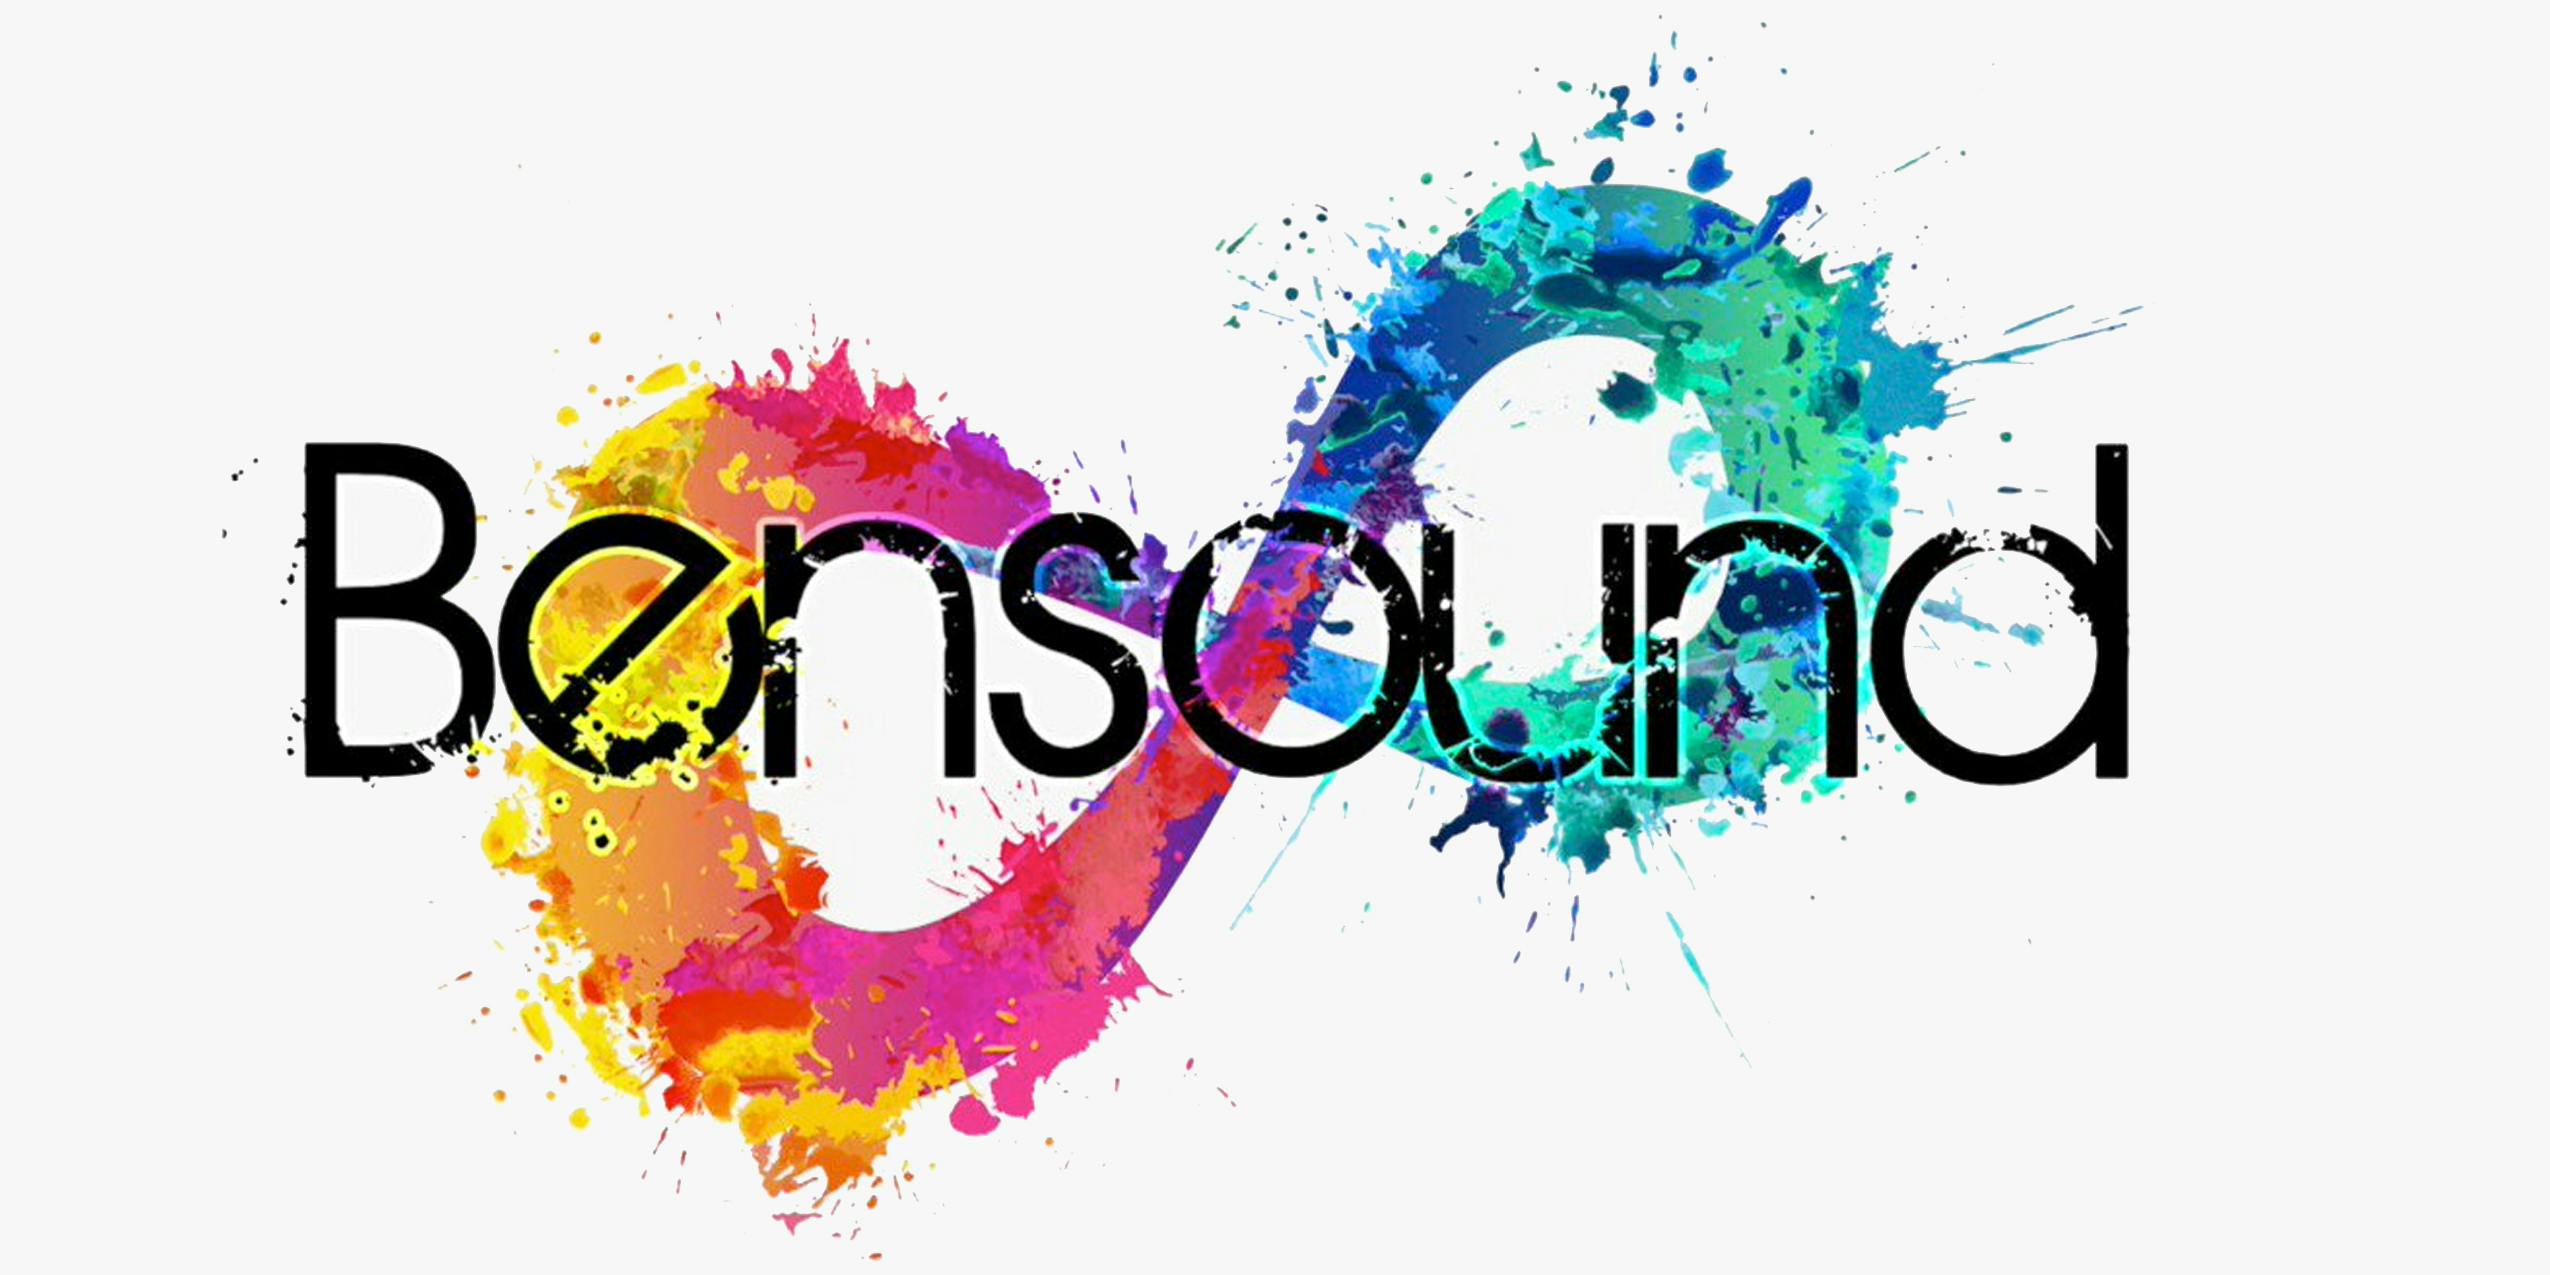 Bensound logo.